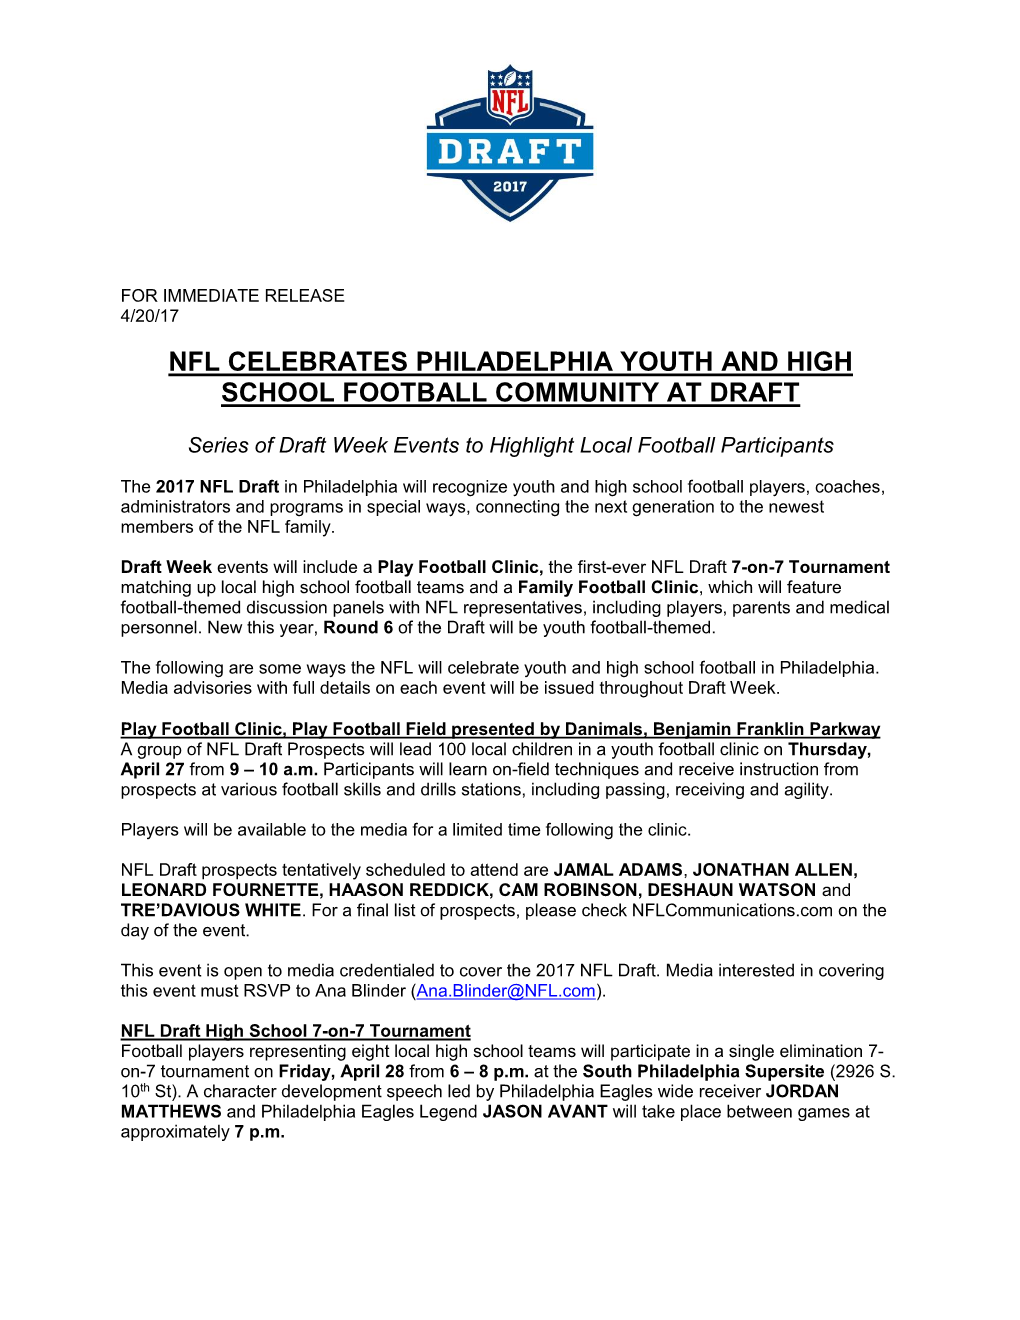 Nfl Celebrates Philadelphia Youth and High School Football Community at Draft